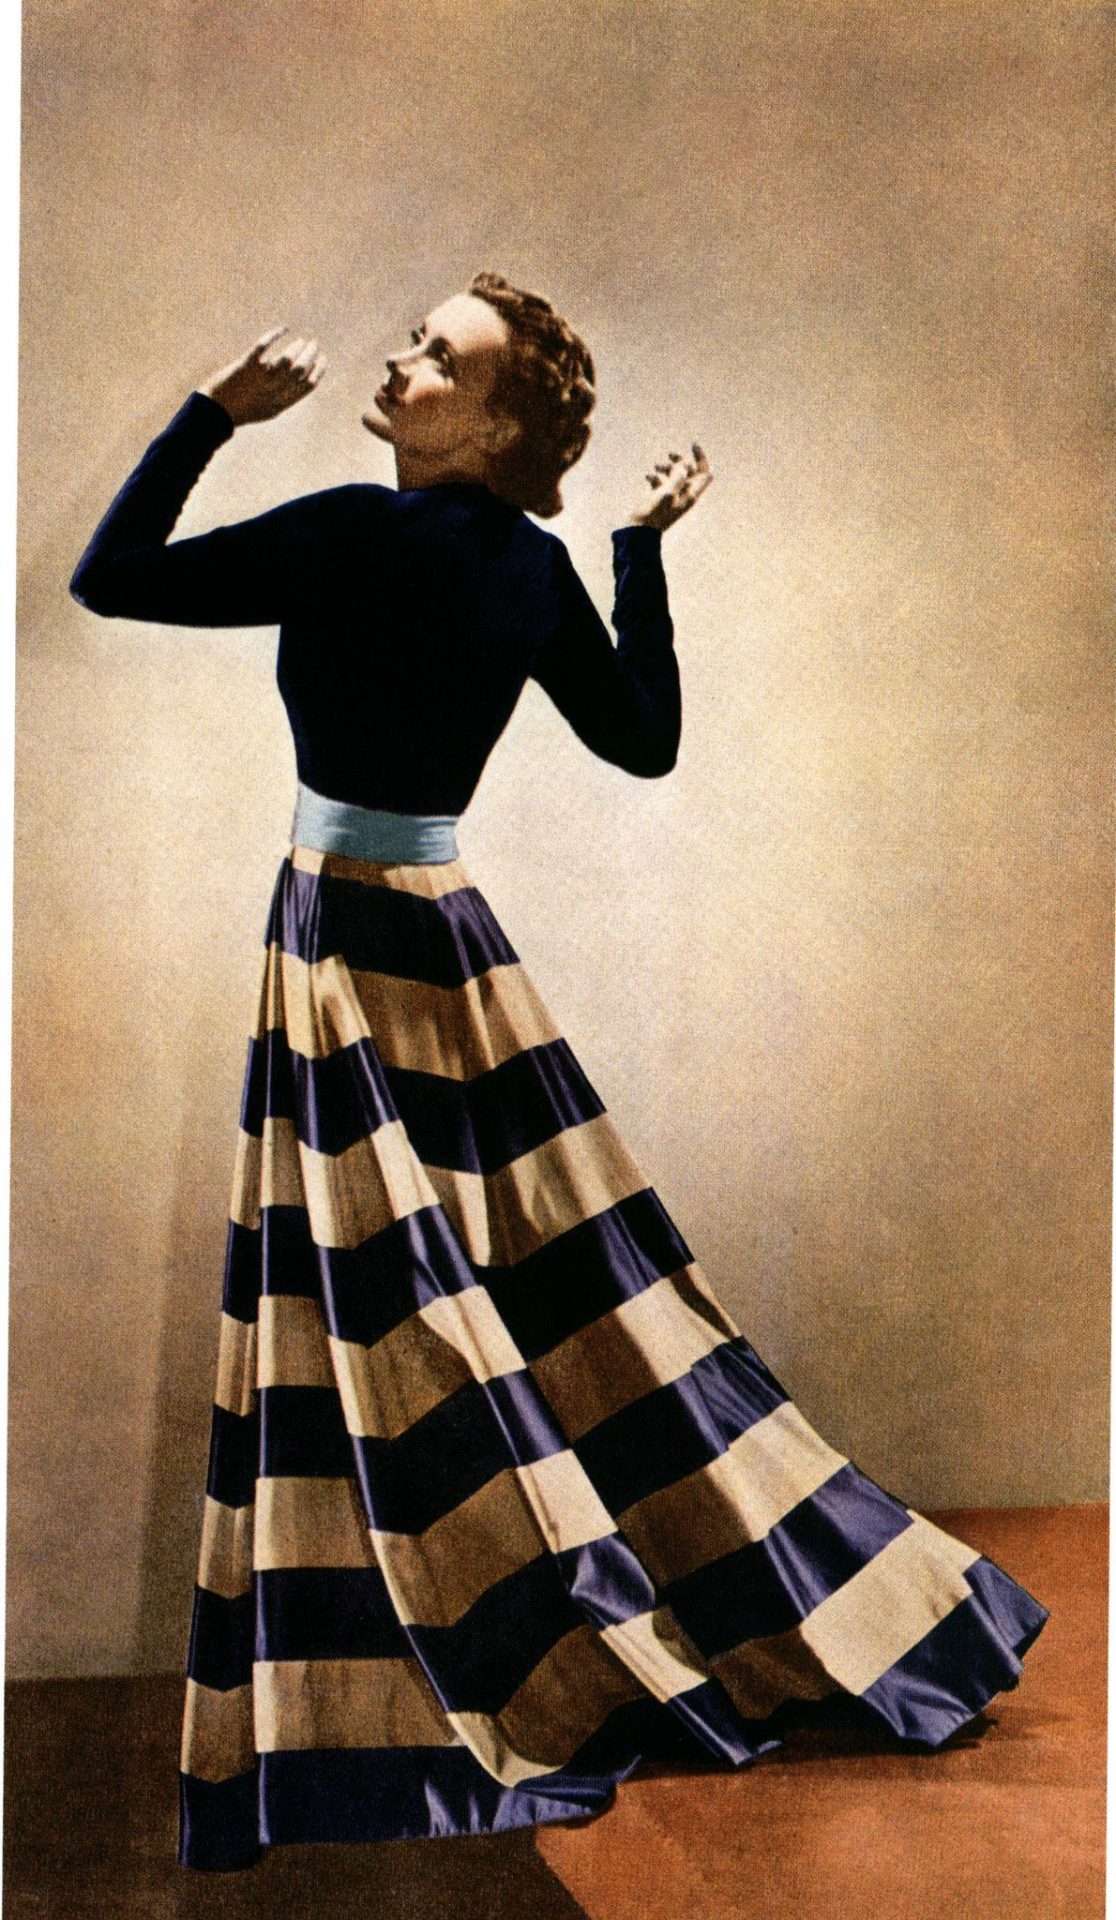 50s silhouette dress